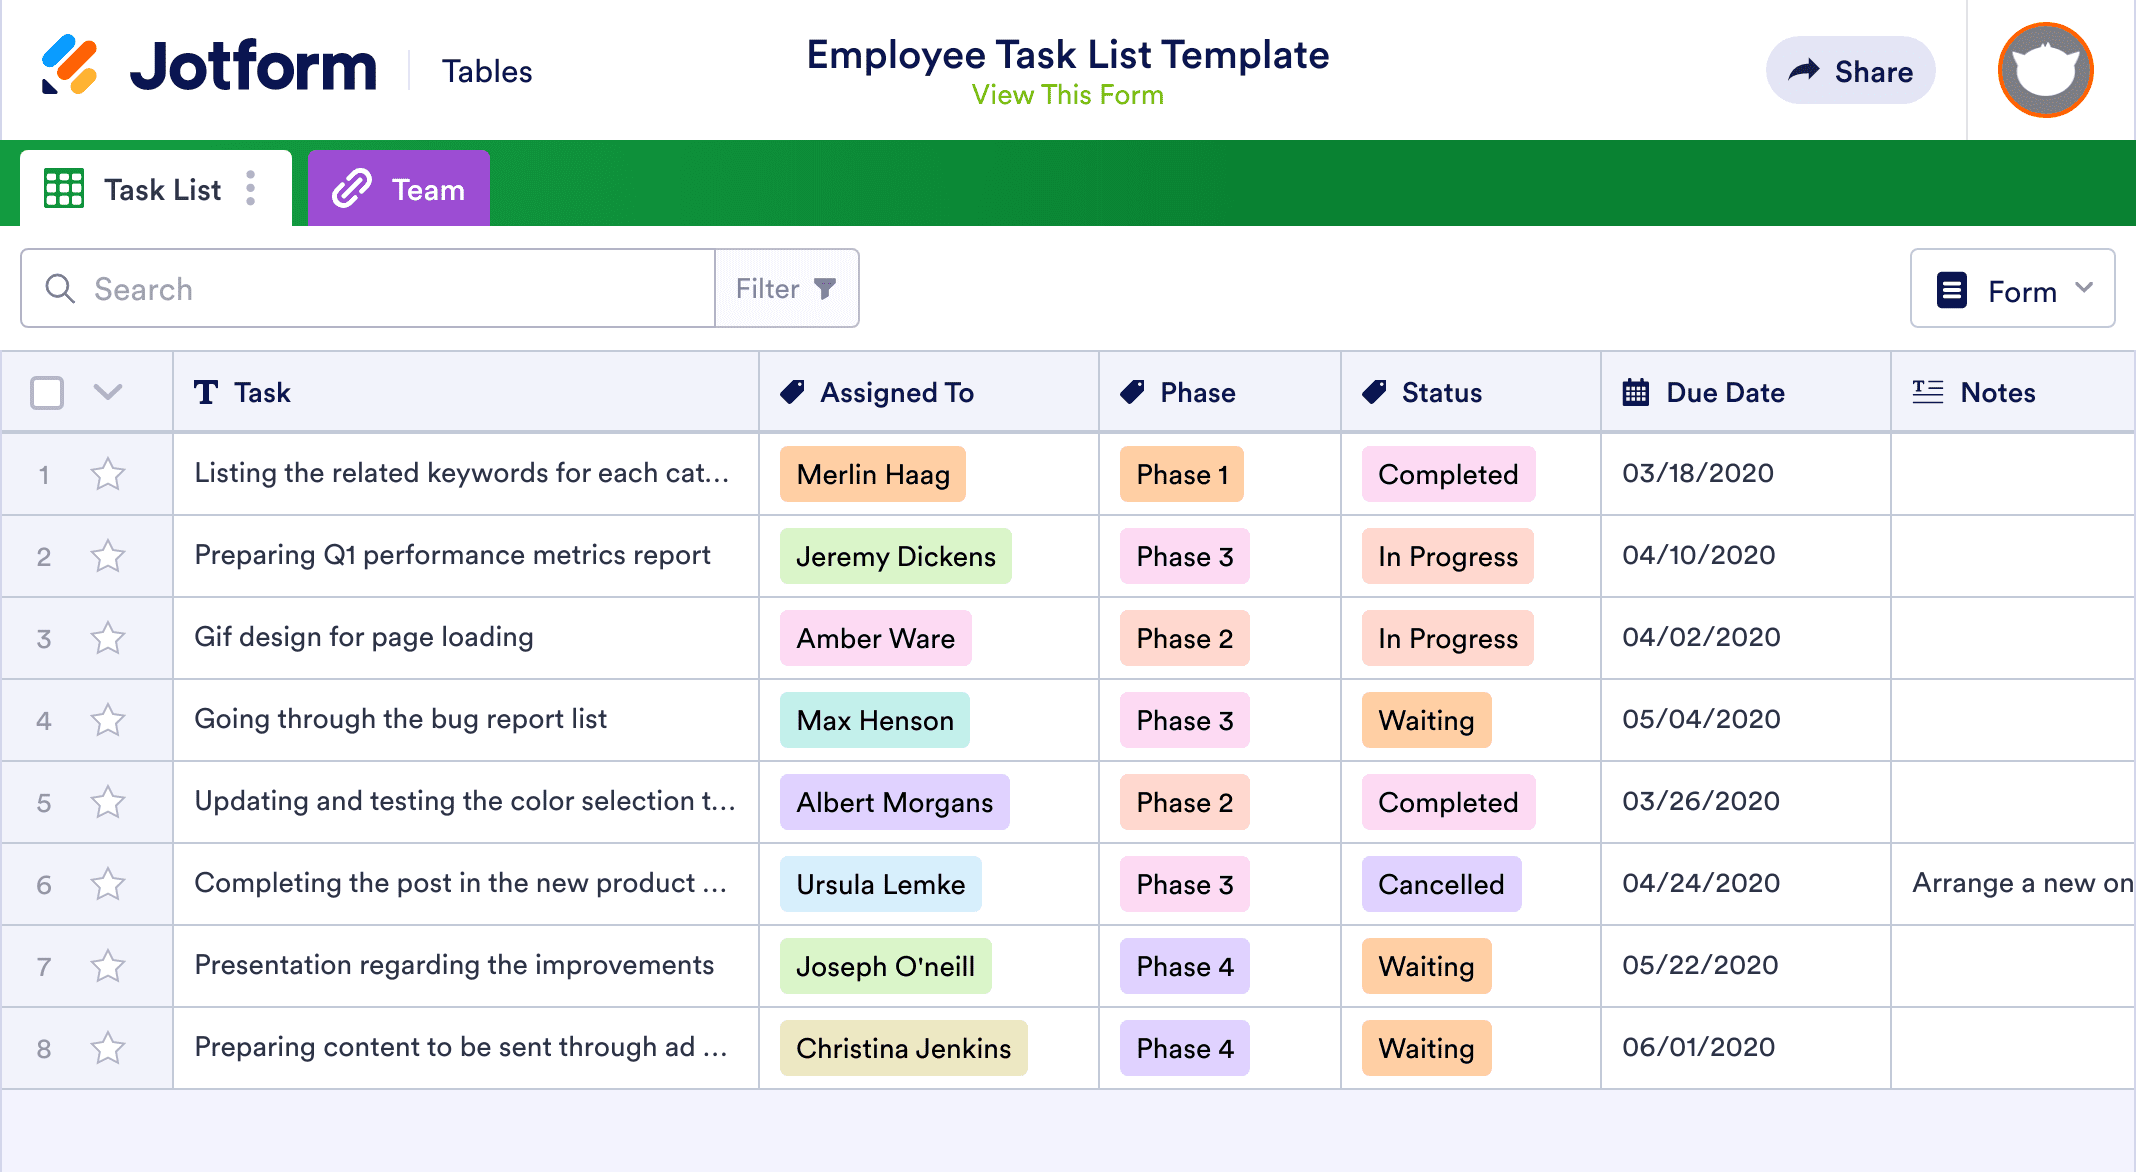 Employee Task List Template Jotform Tables